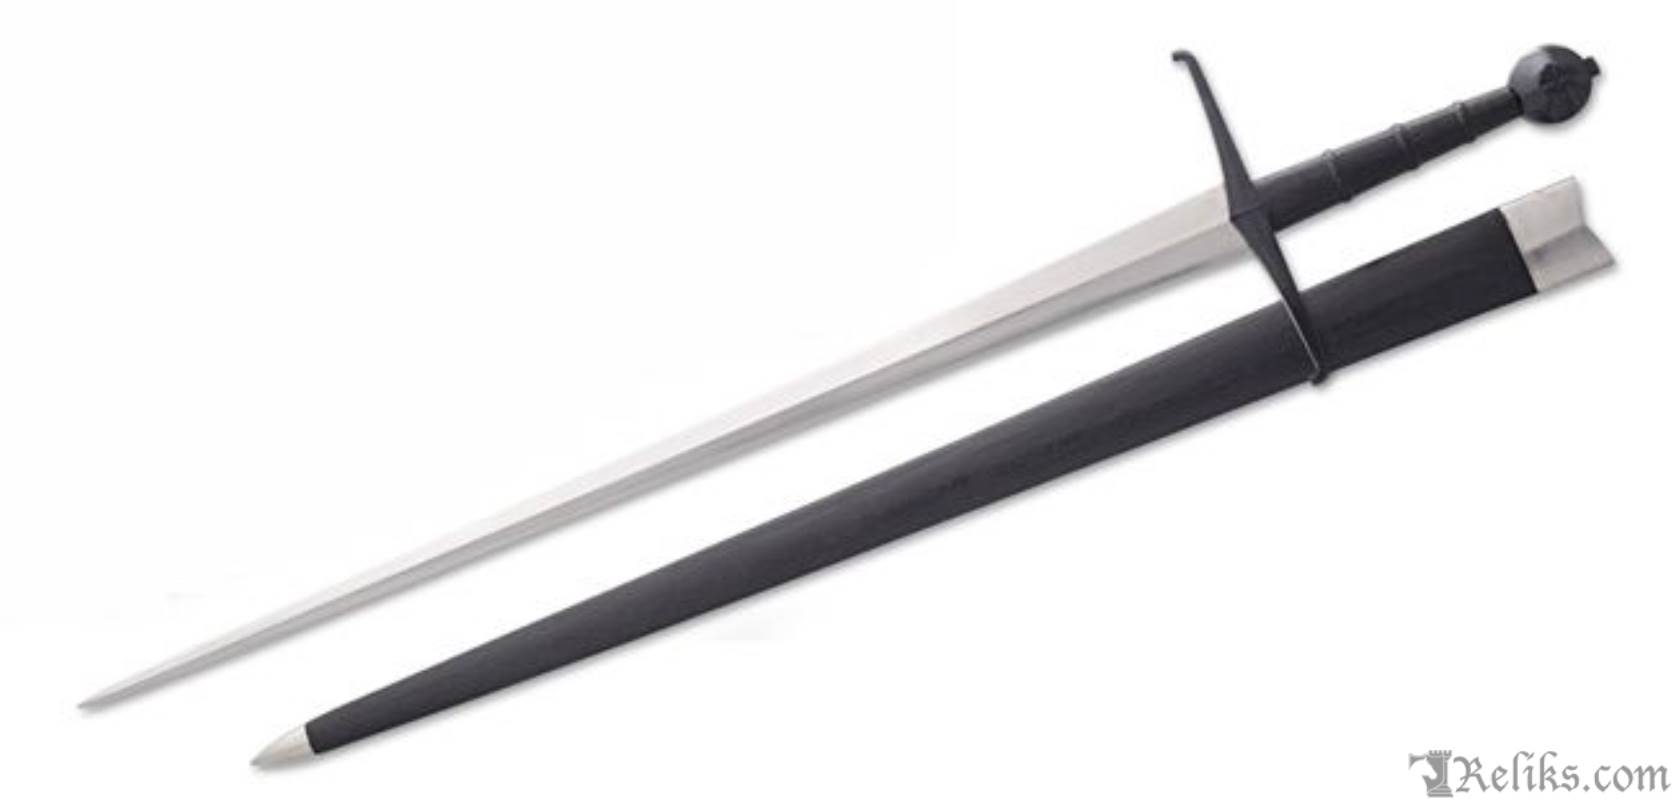 Black Prince Sword